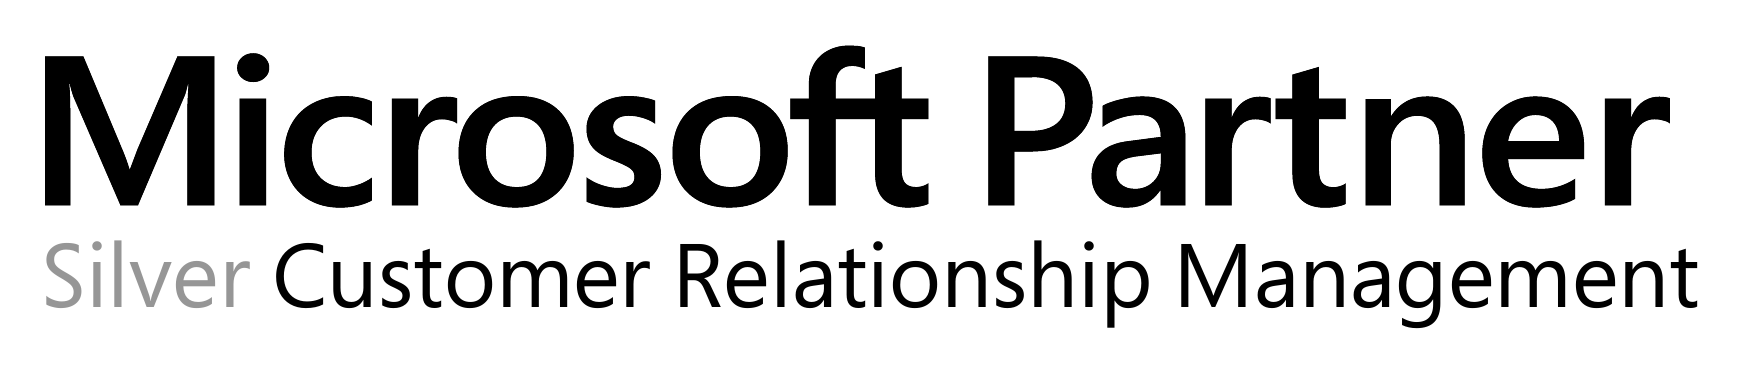 Microsoft Partner Silver Customer Relationship Managment